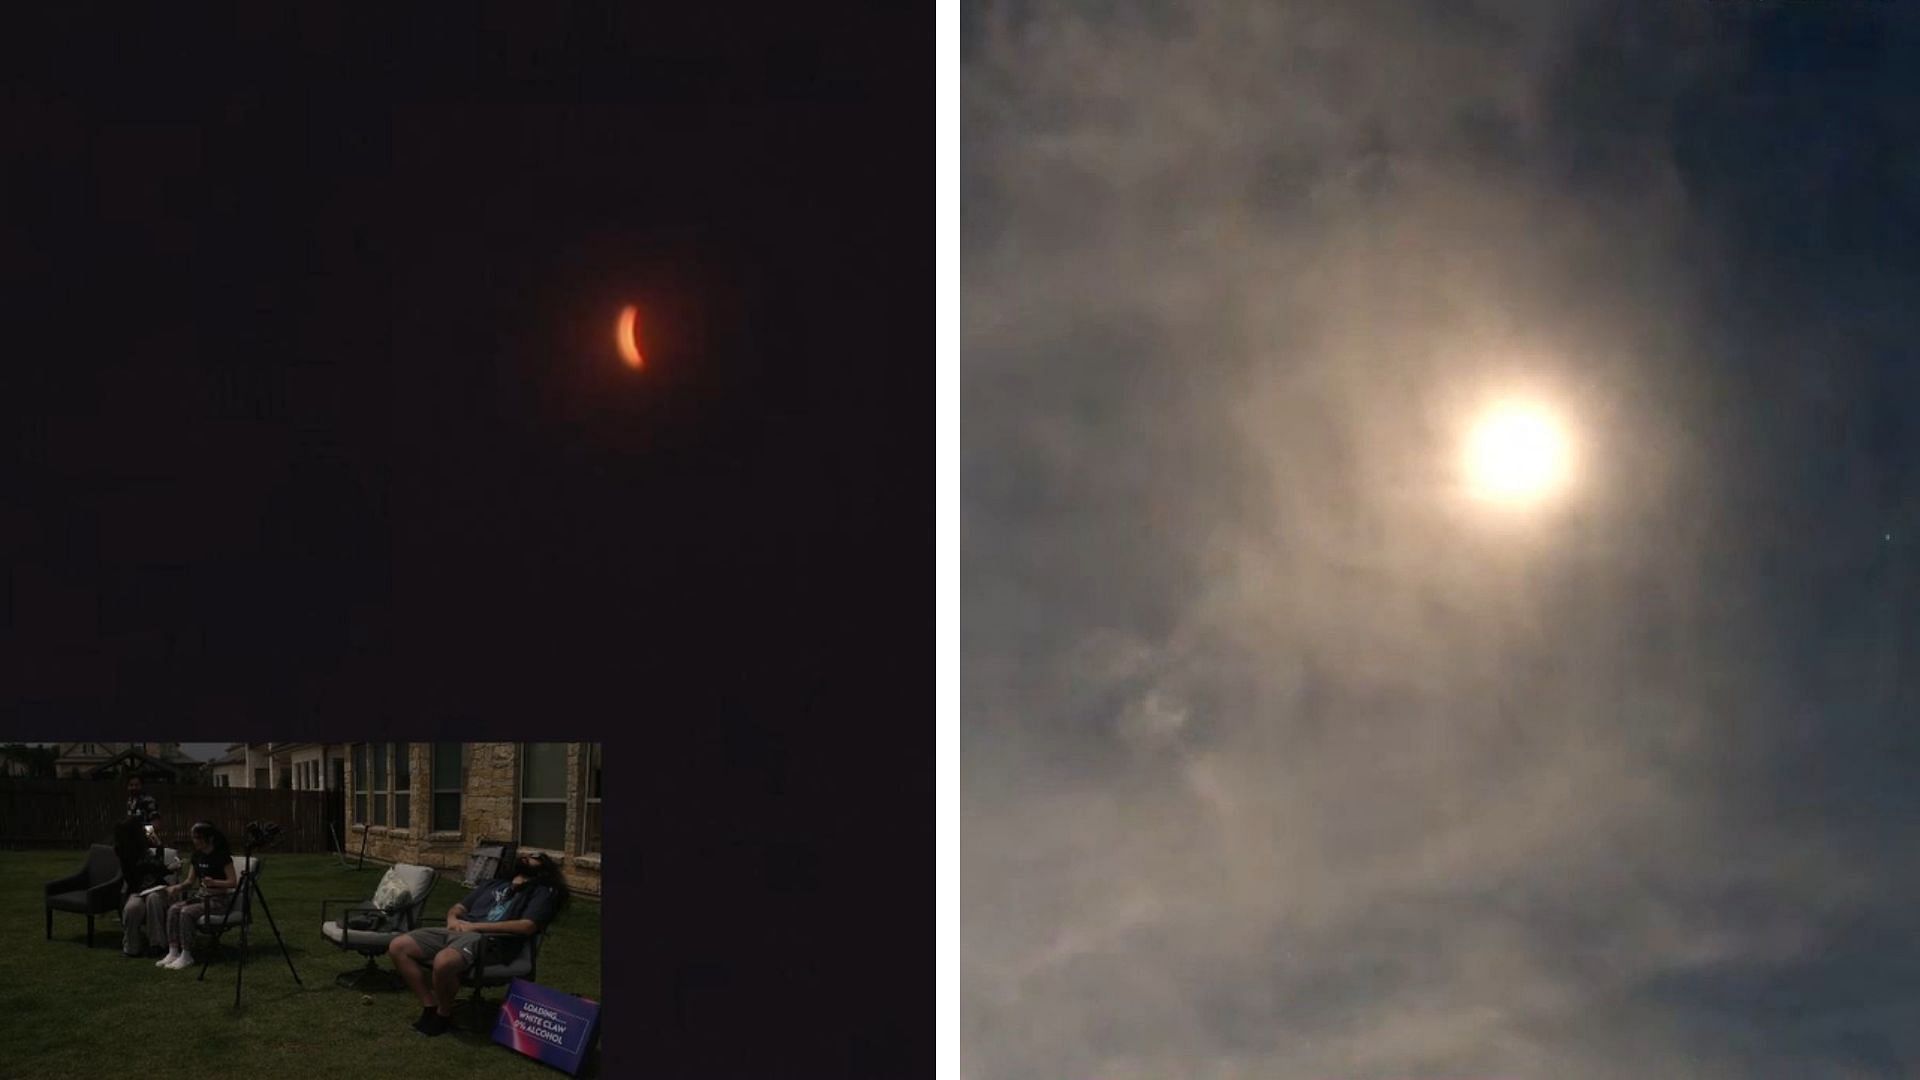 OTK watches the Solar Eclipse live on Twitch (Image via Nmplol/Twitch)